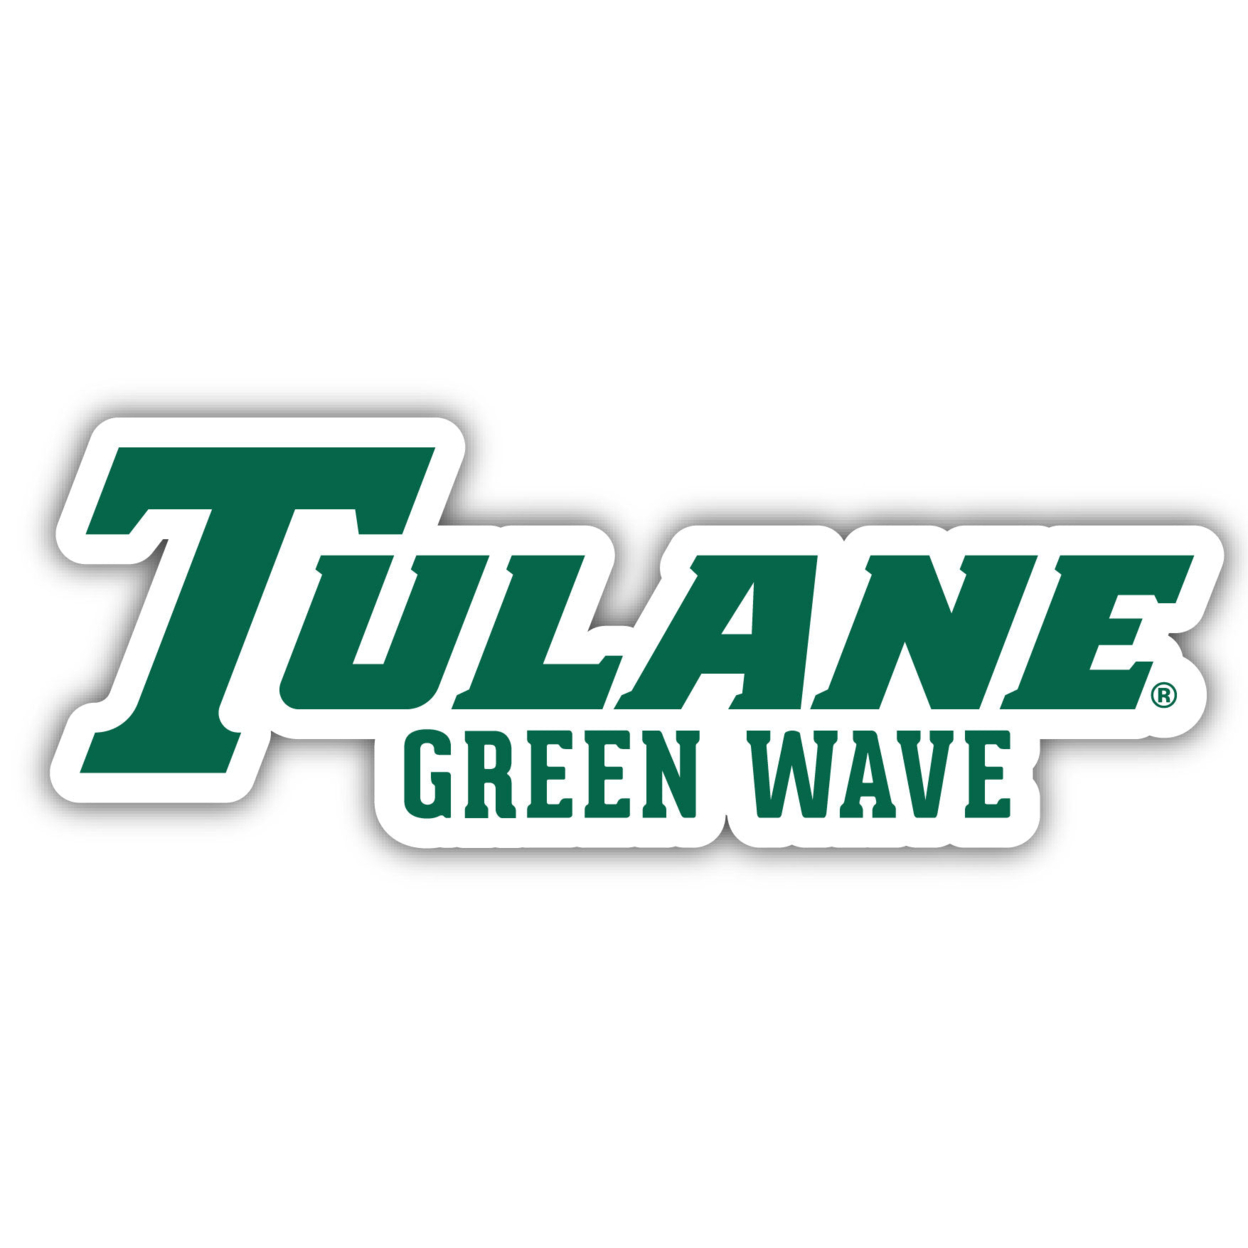 Tulane University Green Wave 12 Inch Vinyl Decal Sticker